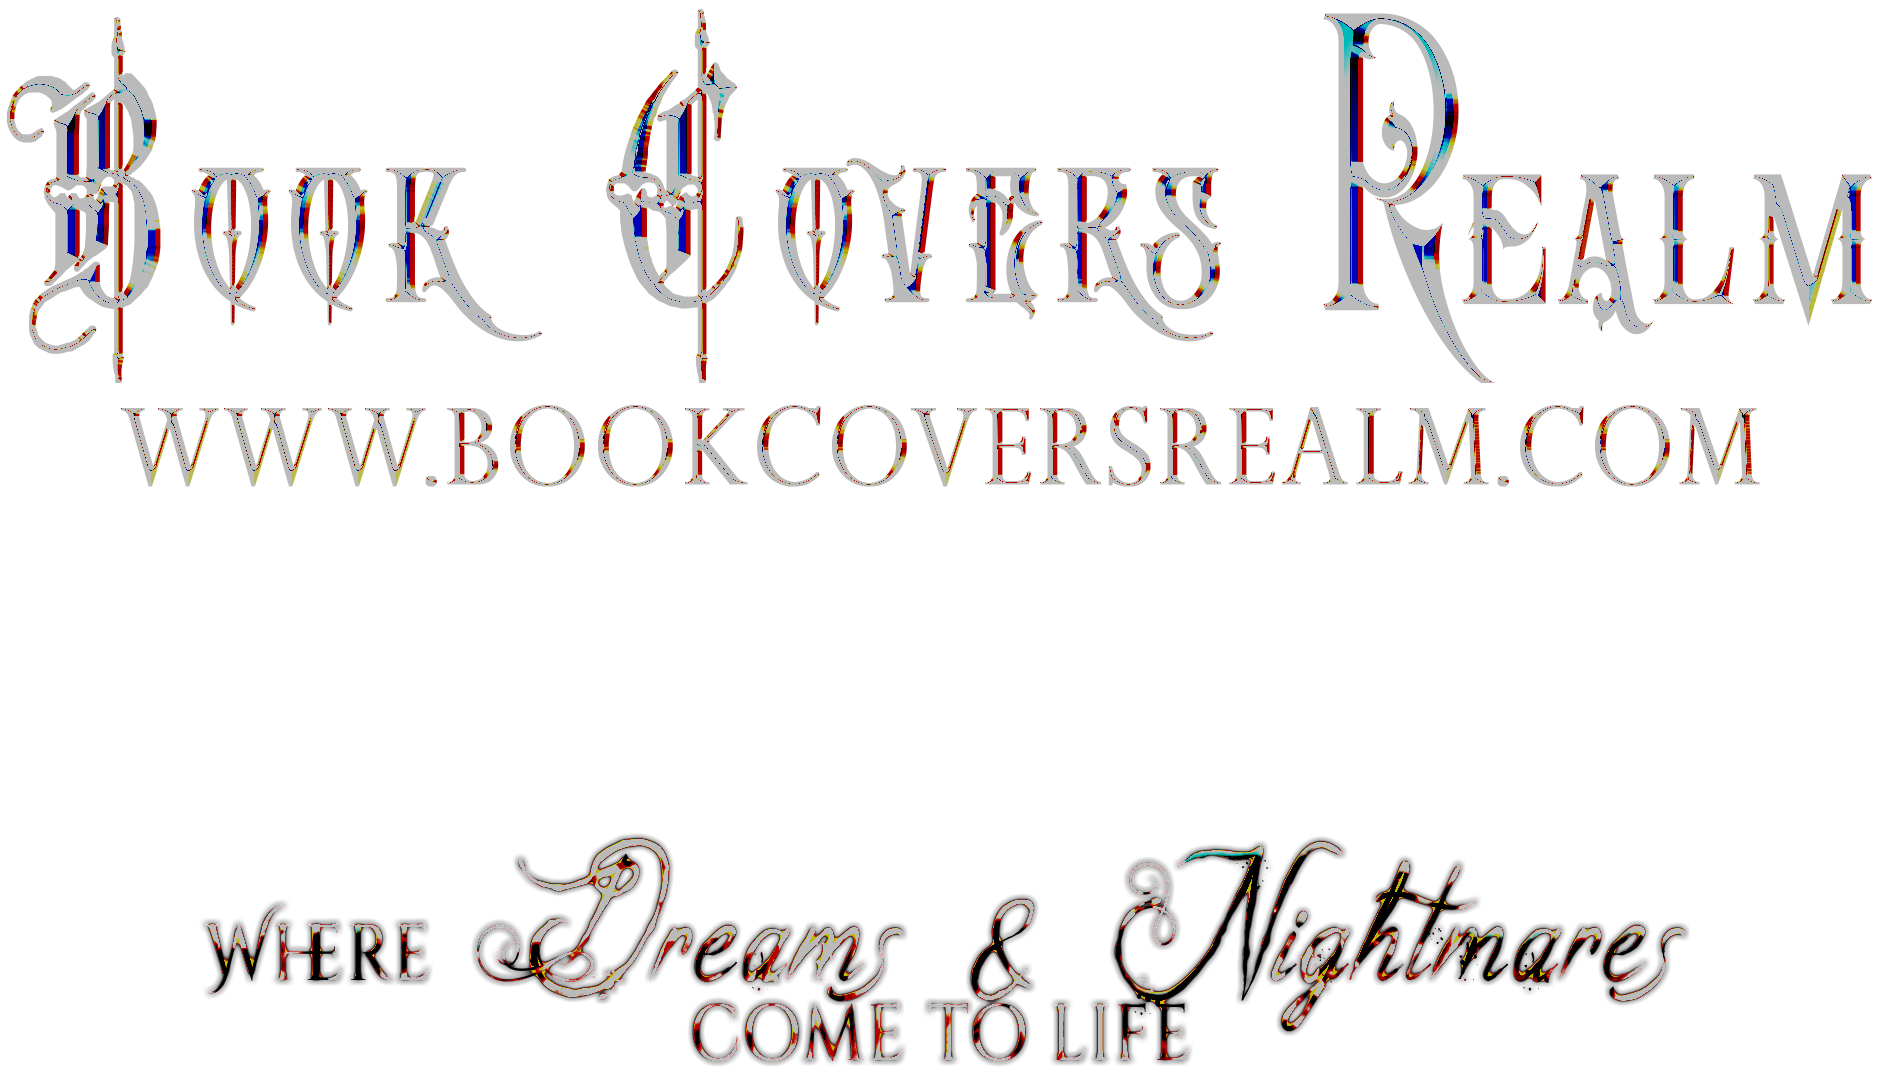 book cover realm banner icon